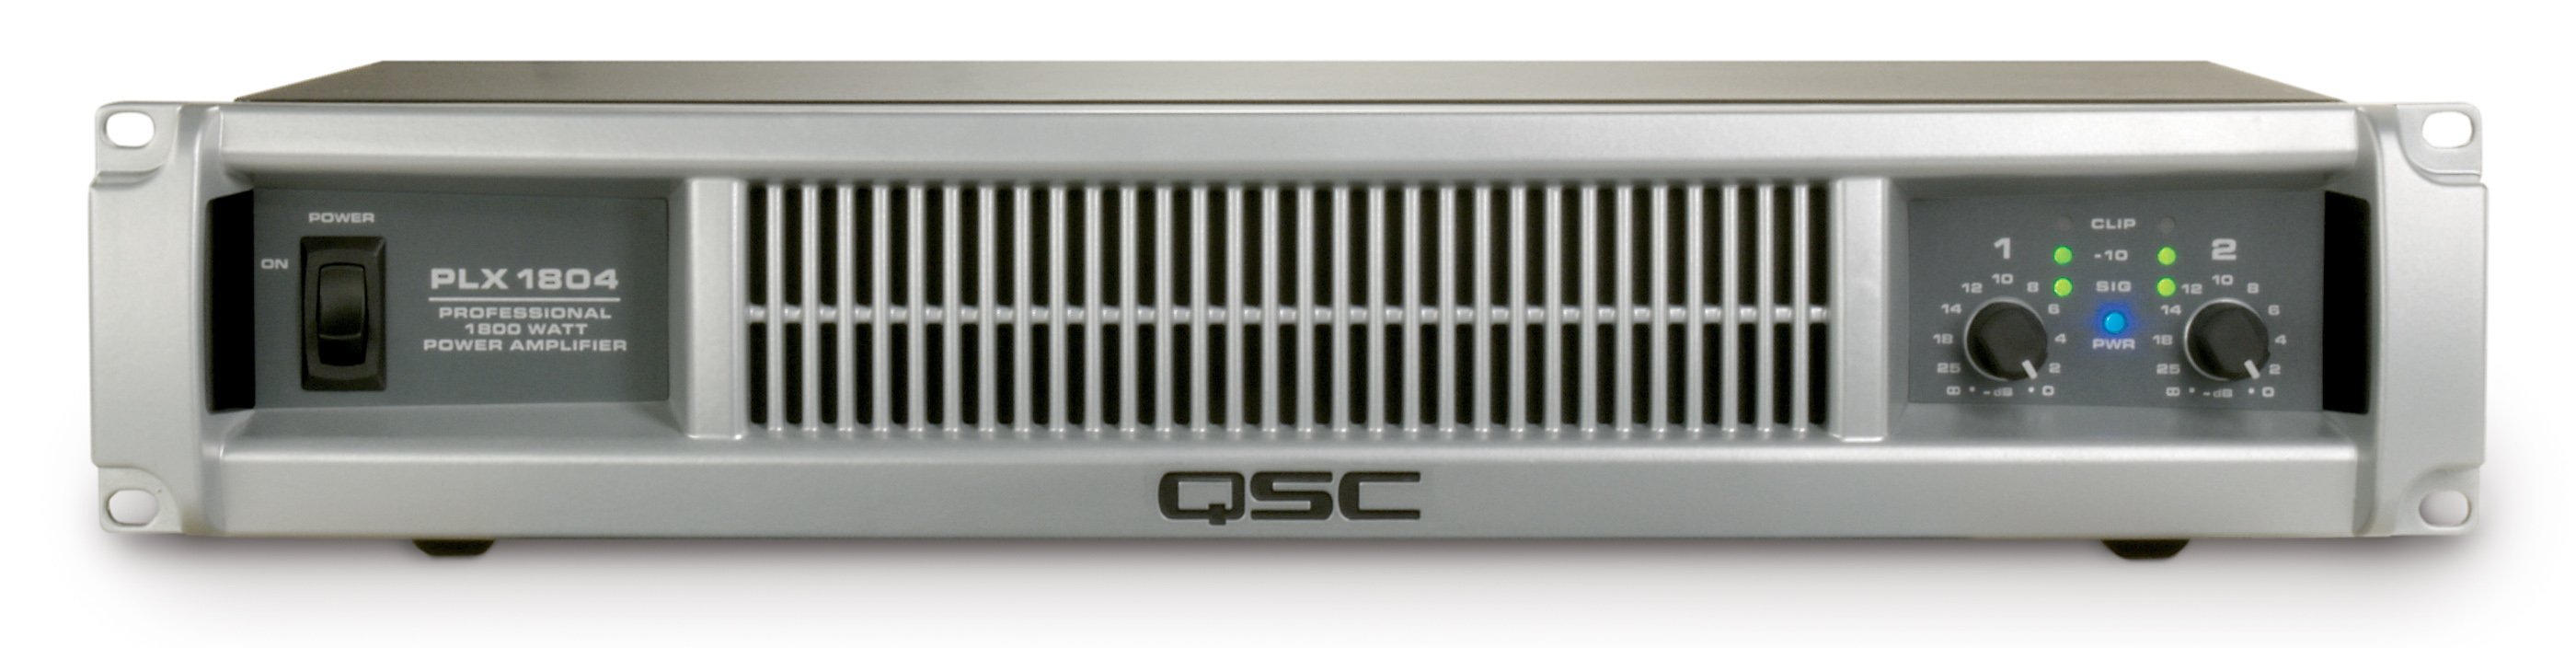 QSC QSC PLX1804 Power Amplifier, 1800 Watts